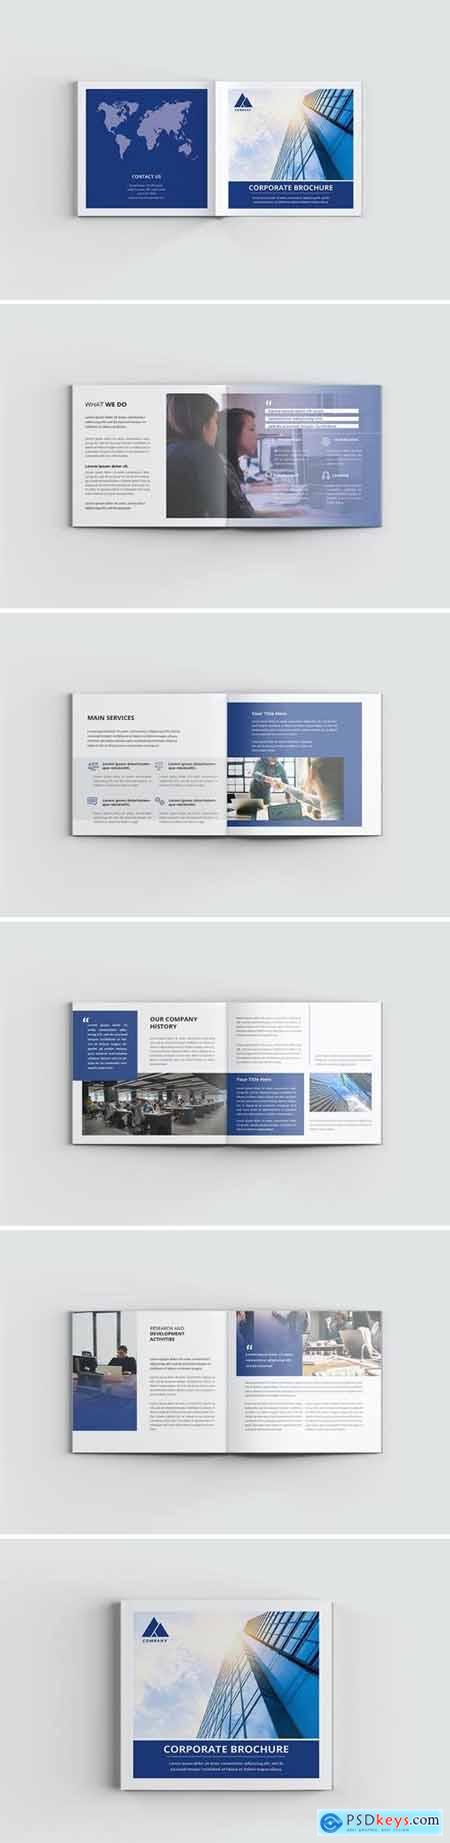 Blue Square Corporate Brochure